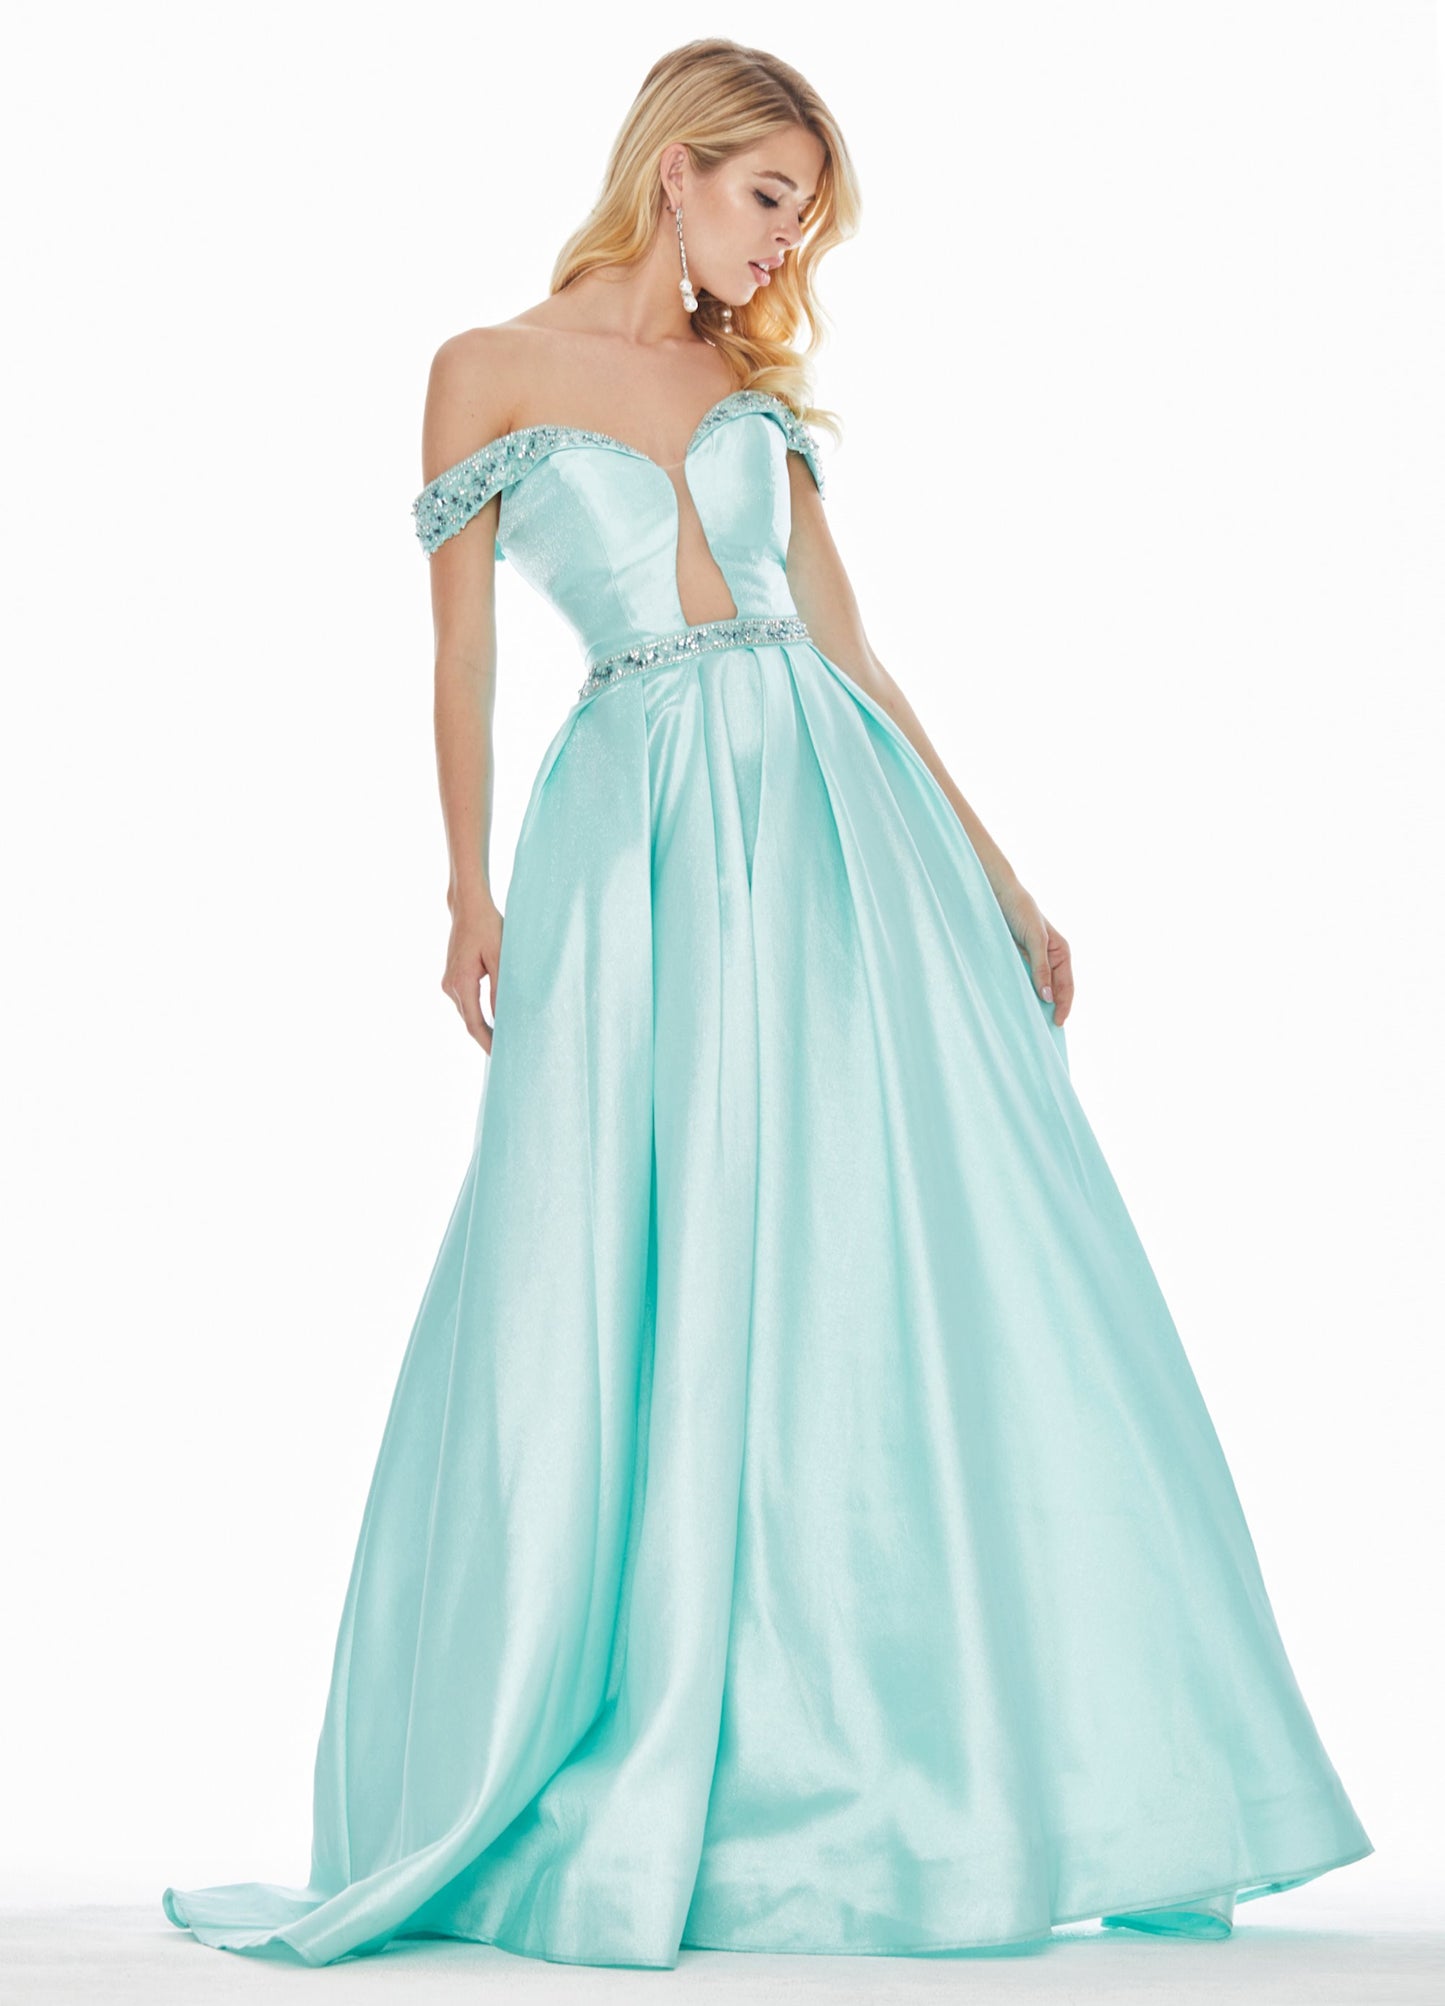 Ashley-Lauren-1476-aqua-prom-dresses-formal-evening-pageant-gown-off-the-shoulder-dress.jpg